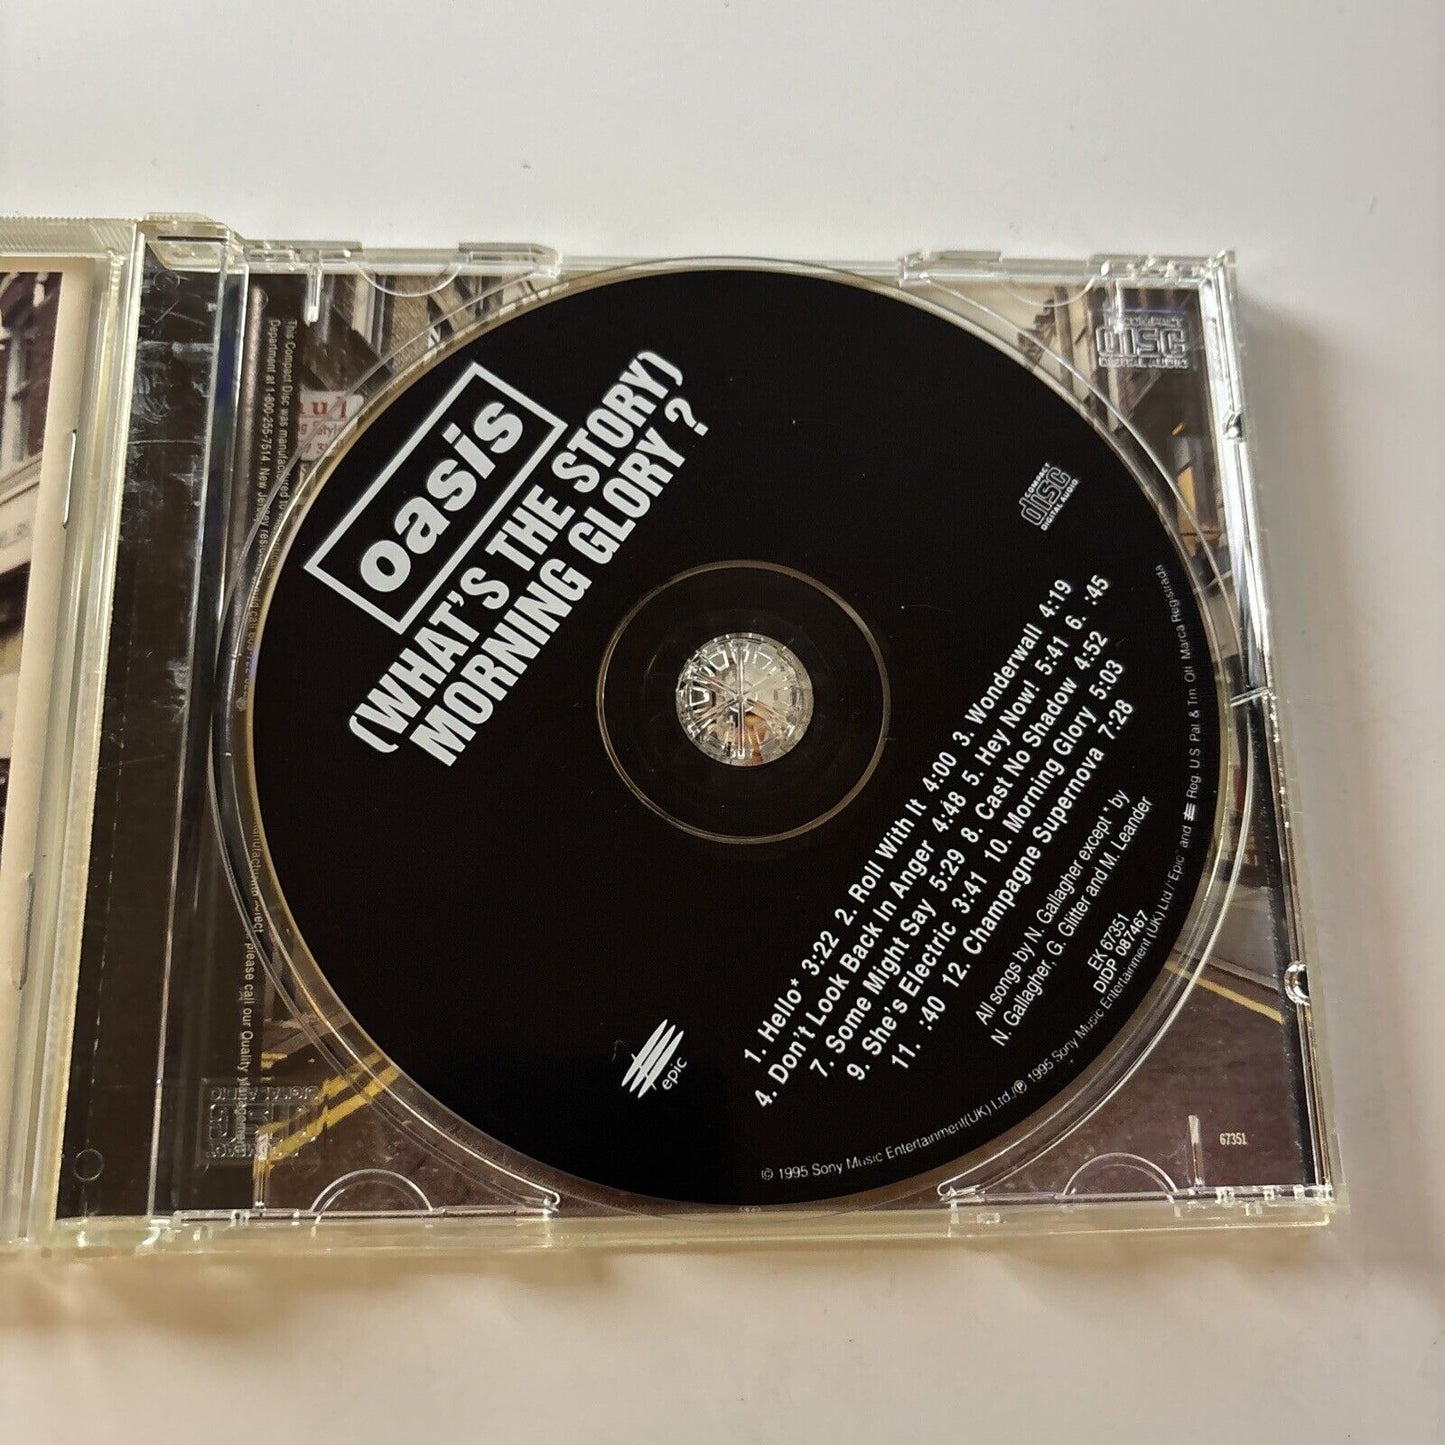 Oasis - (What's the Story) Morning Glory? (CD, 1995) Ek-67351 – Retro Unit